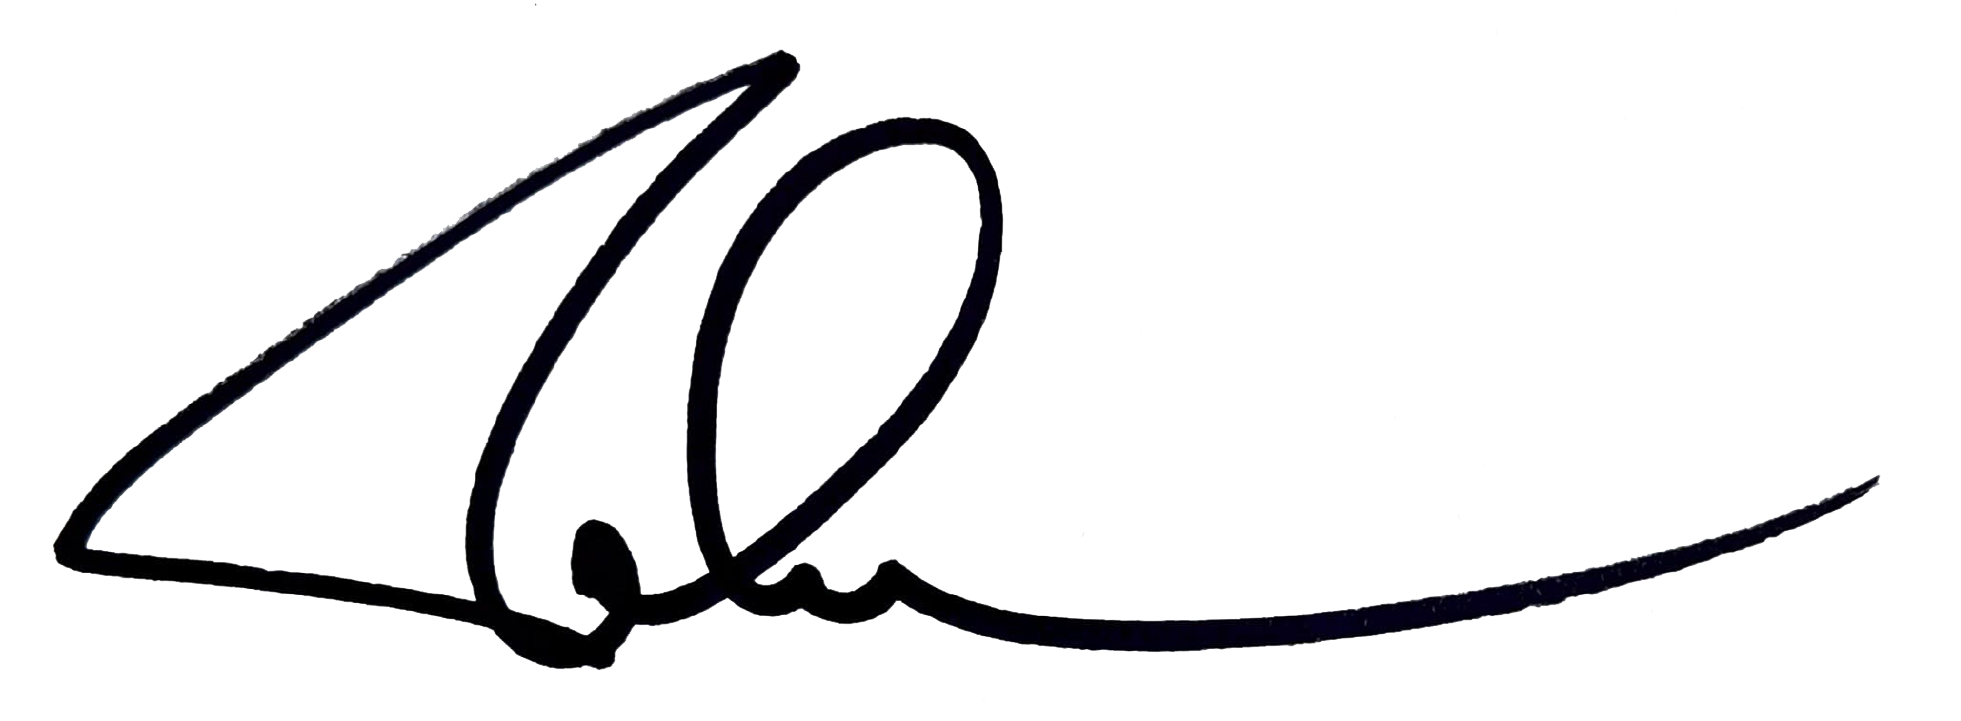 A signature of the name "John"